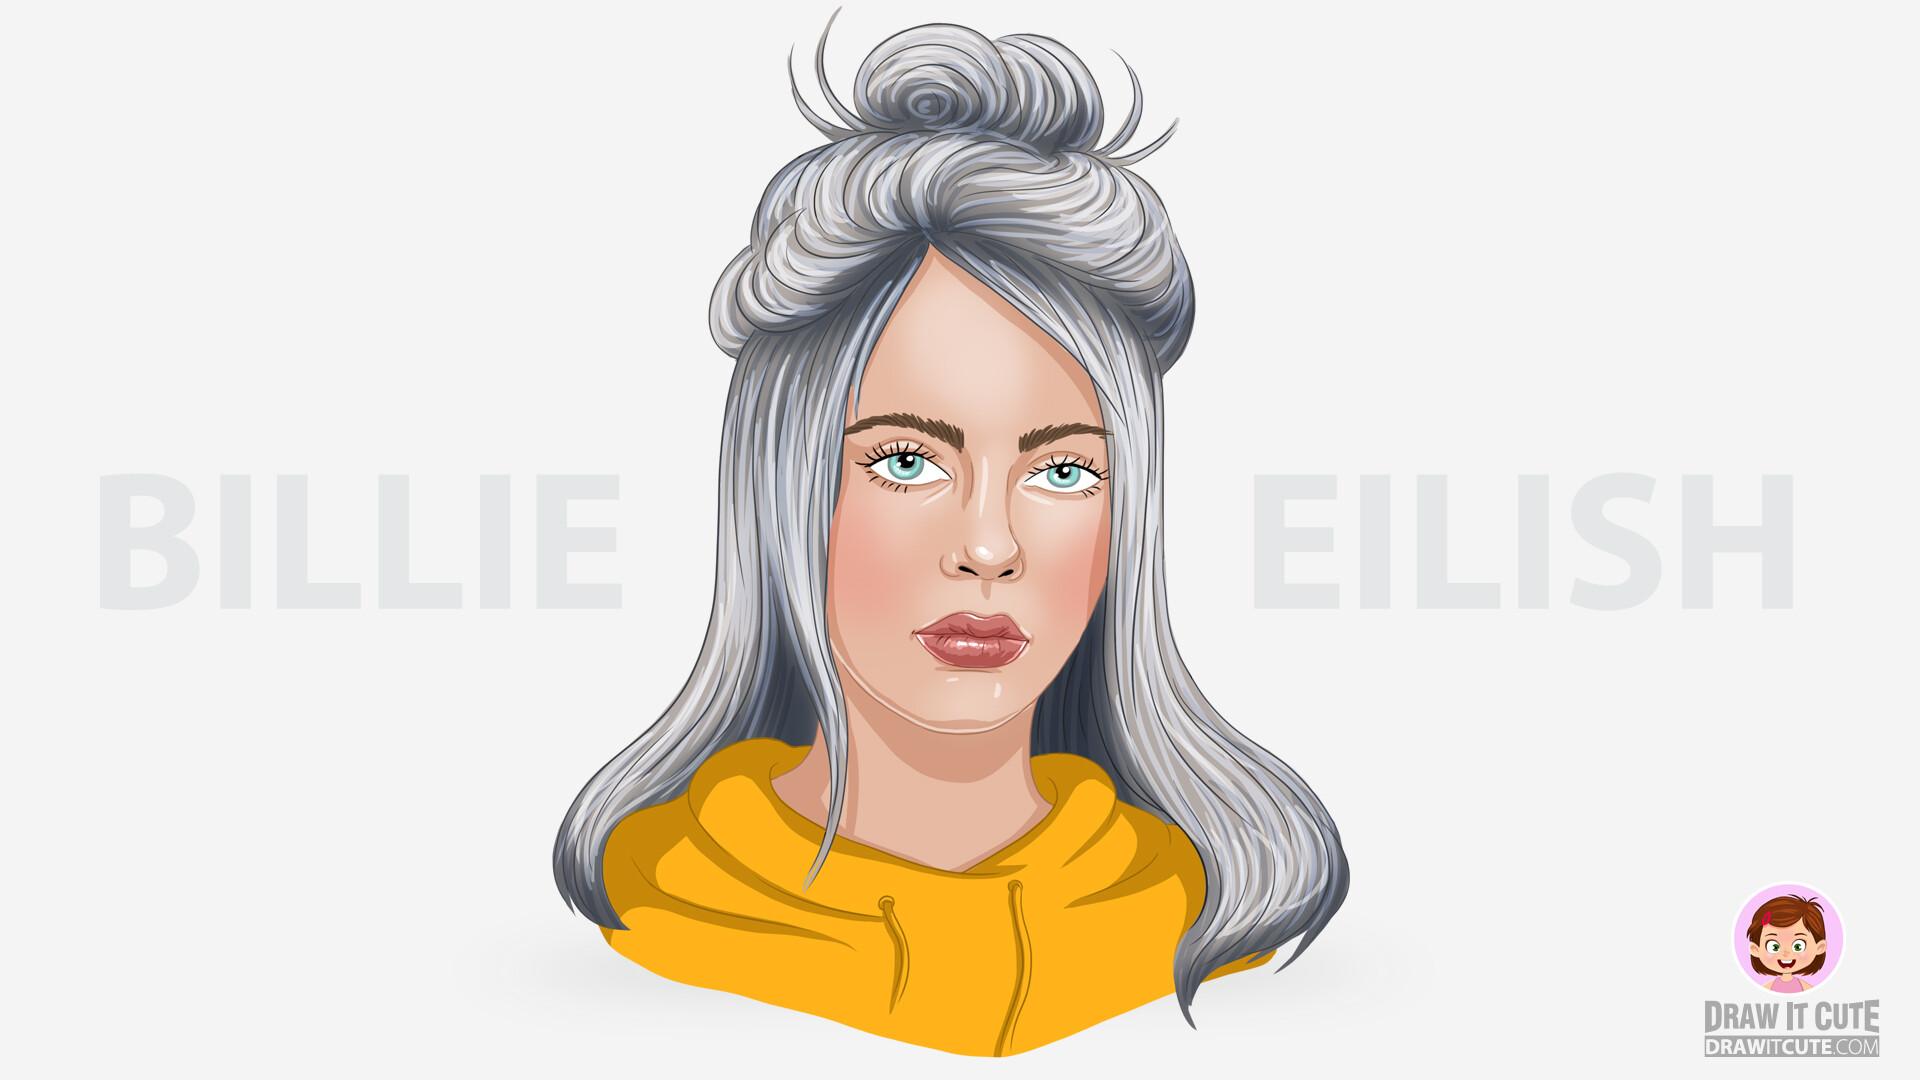 How to draw Billie Eilish Hair, DrawitCute .Com